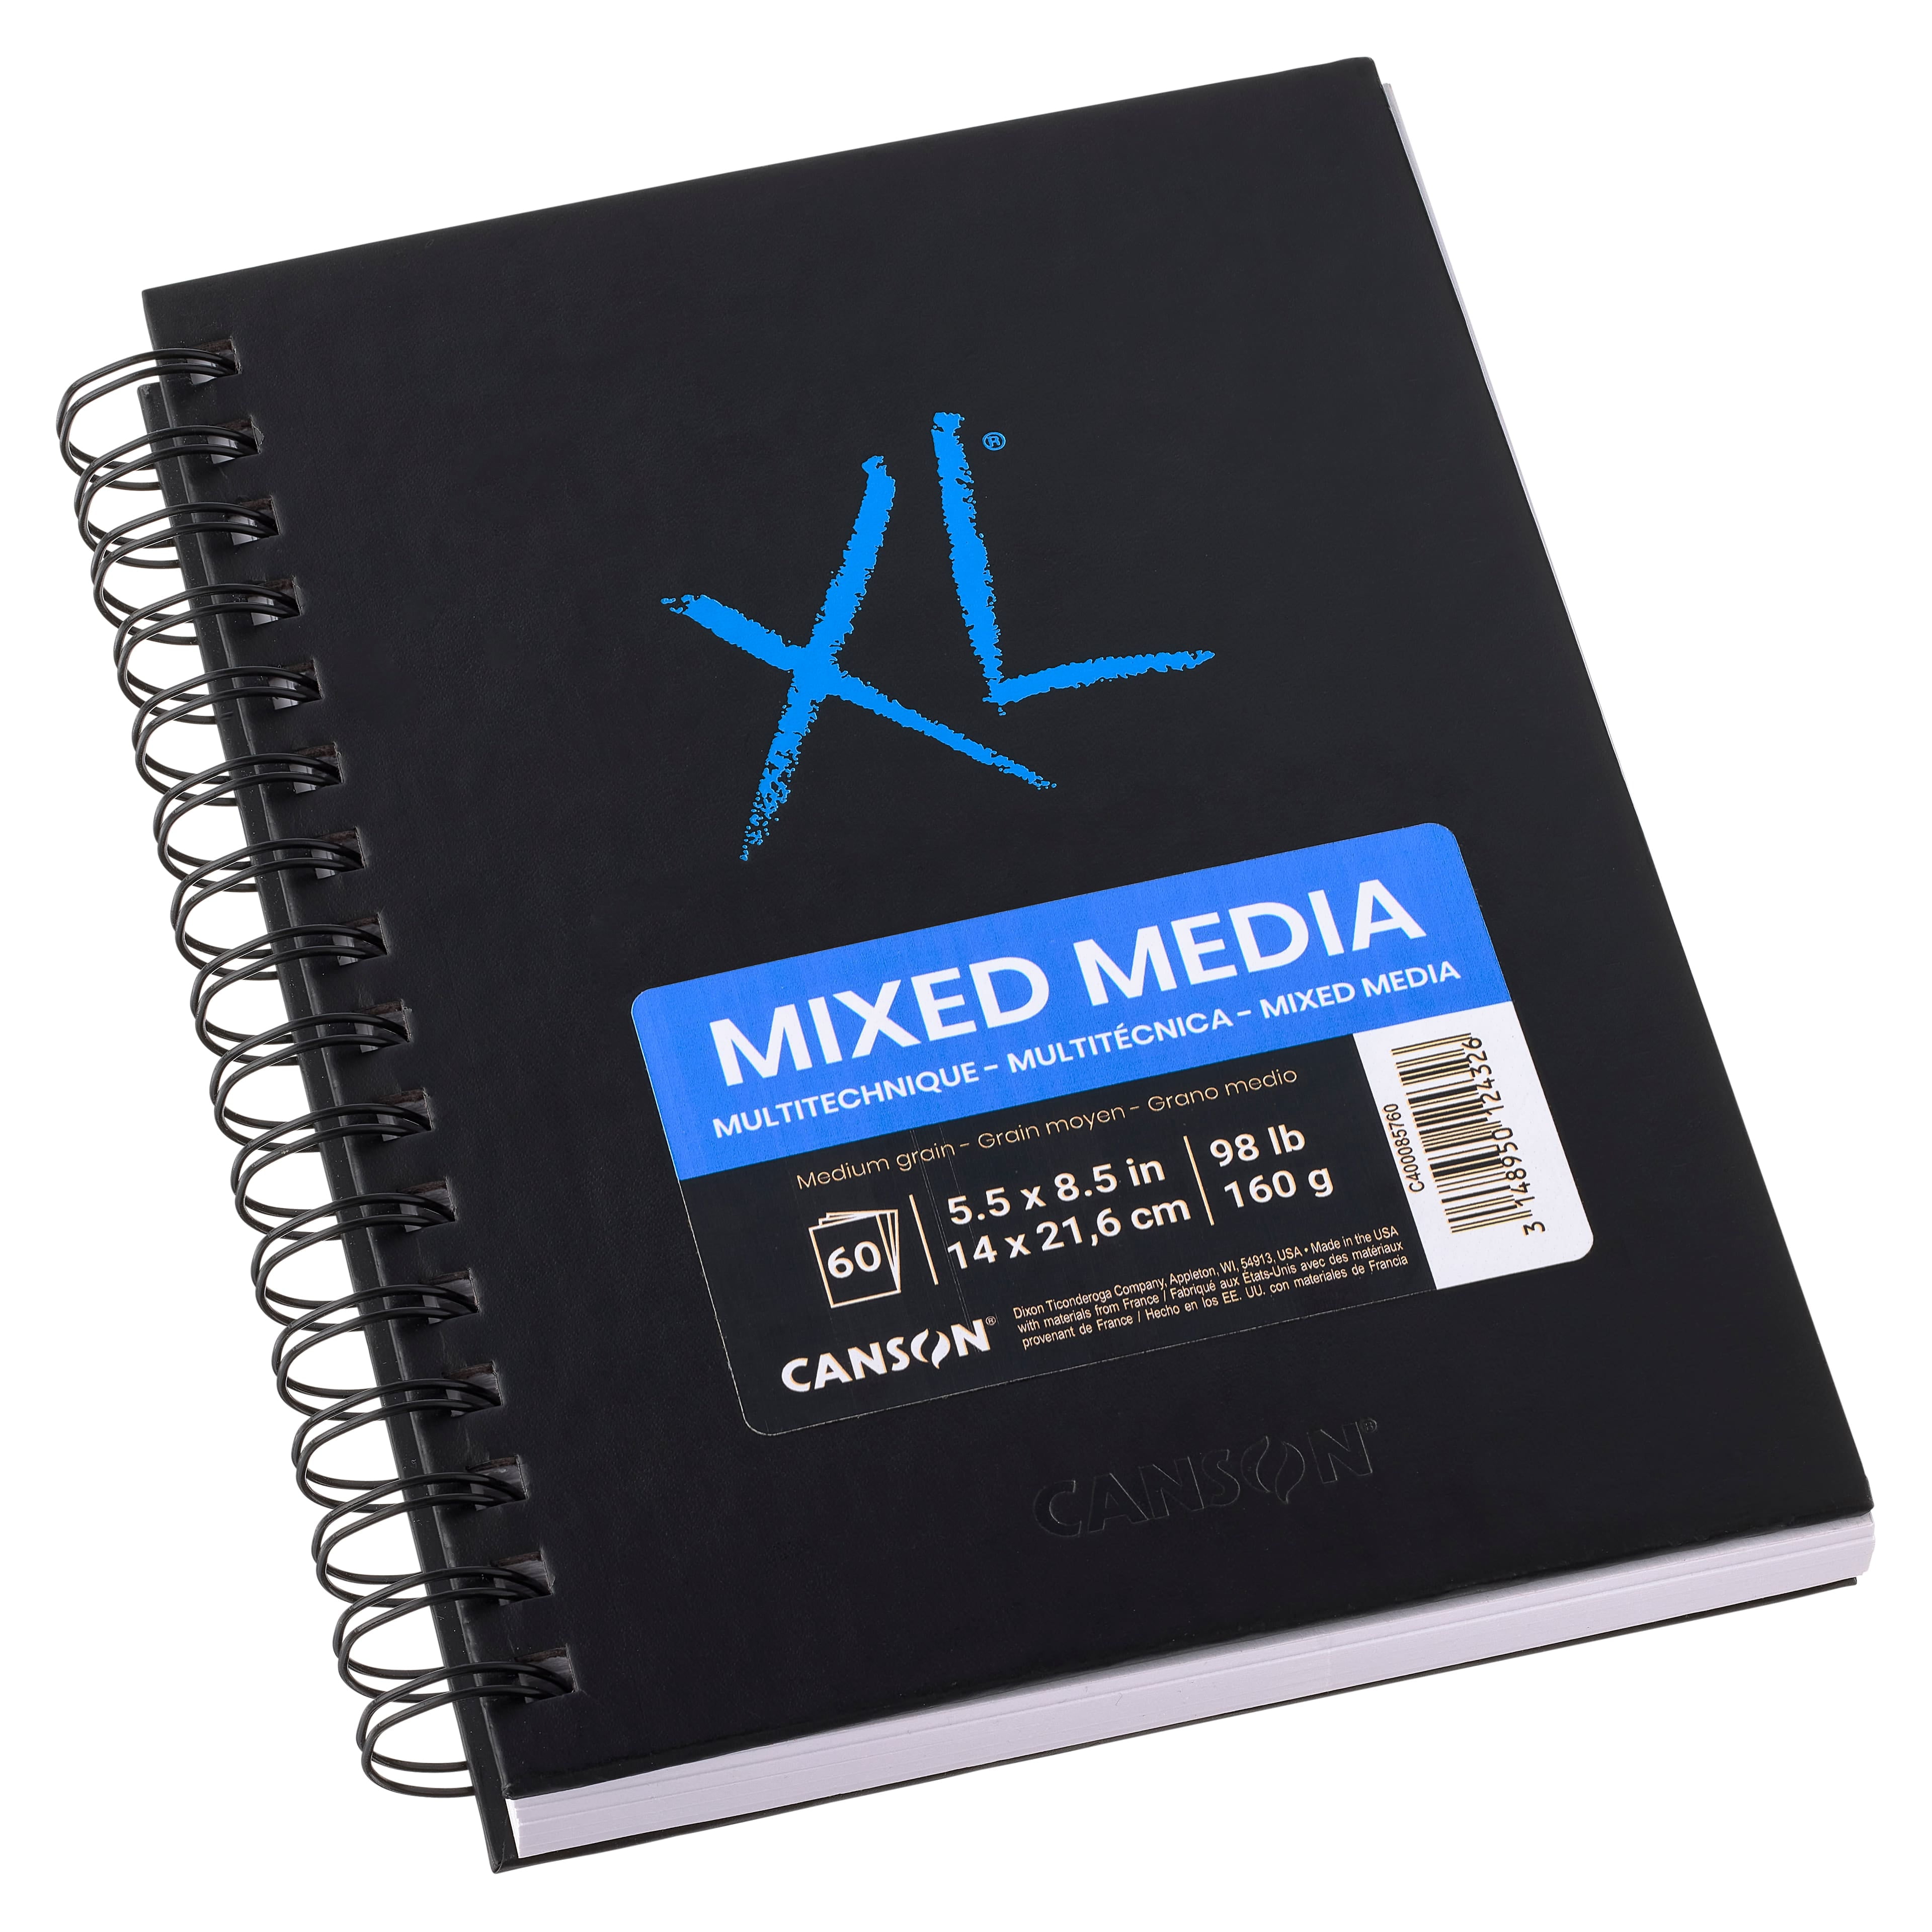 Canson Mix Media Book XL